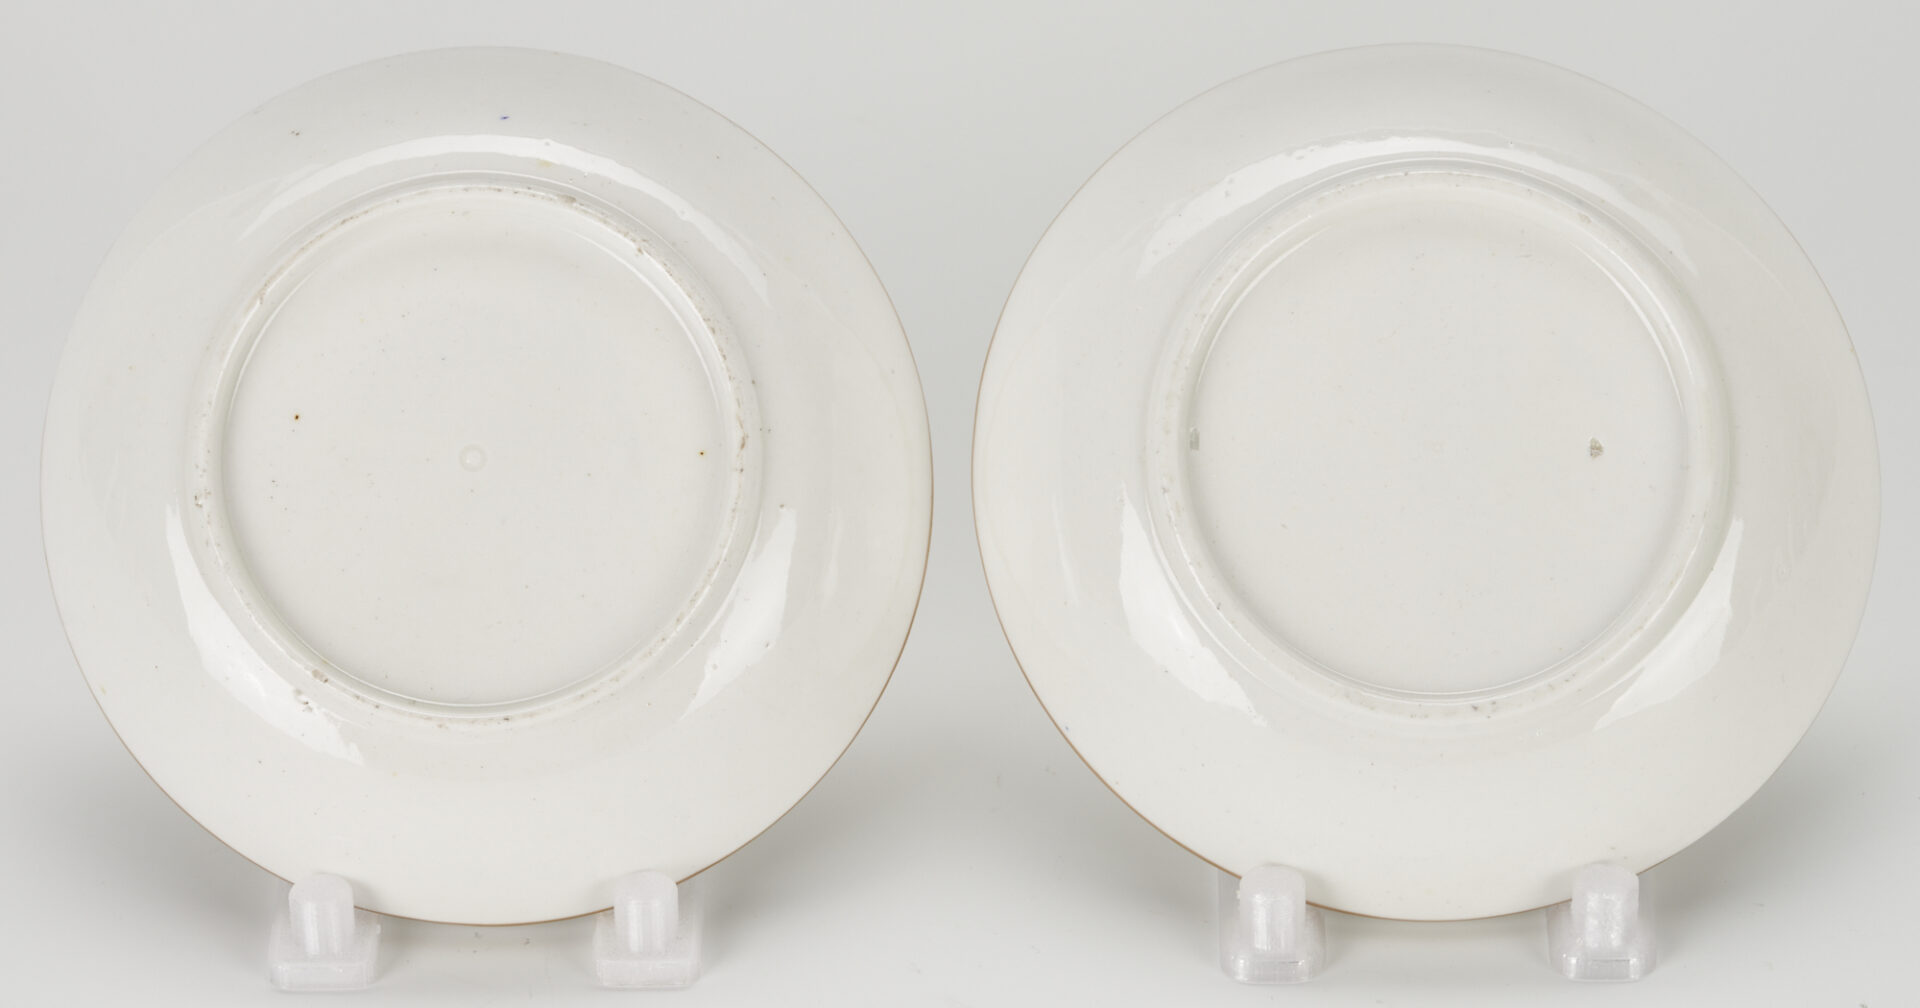 Lot 1011: Copeland Classical Theme Gilt Porcelain Partial Dessert Set